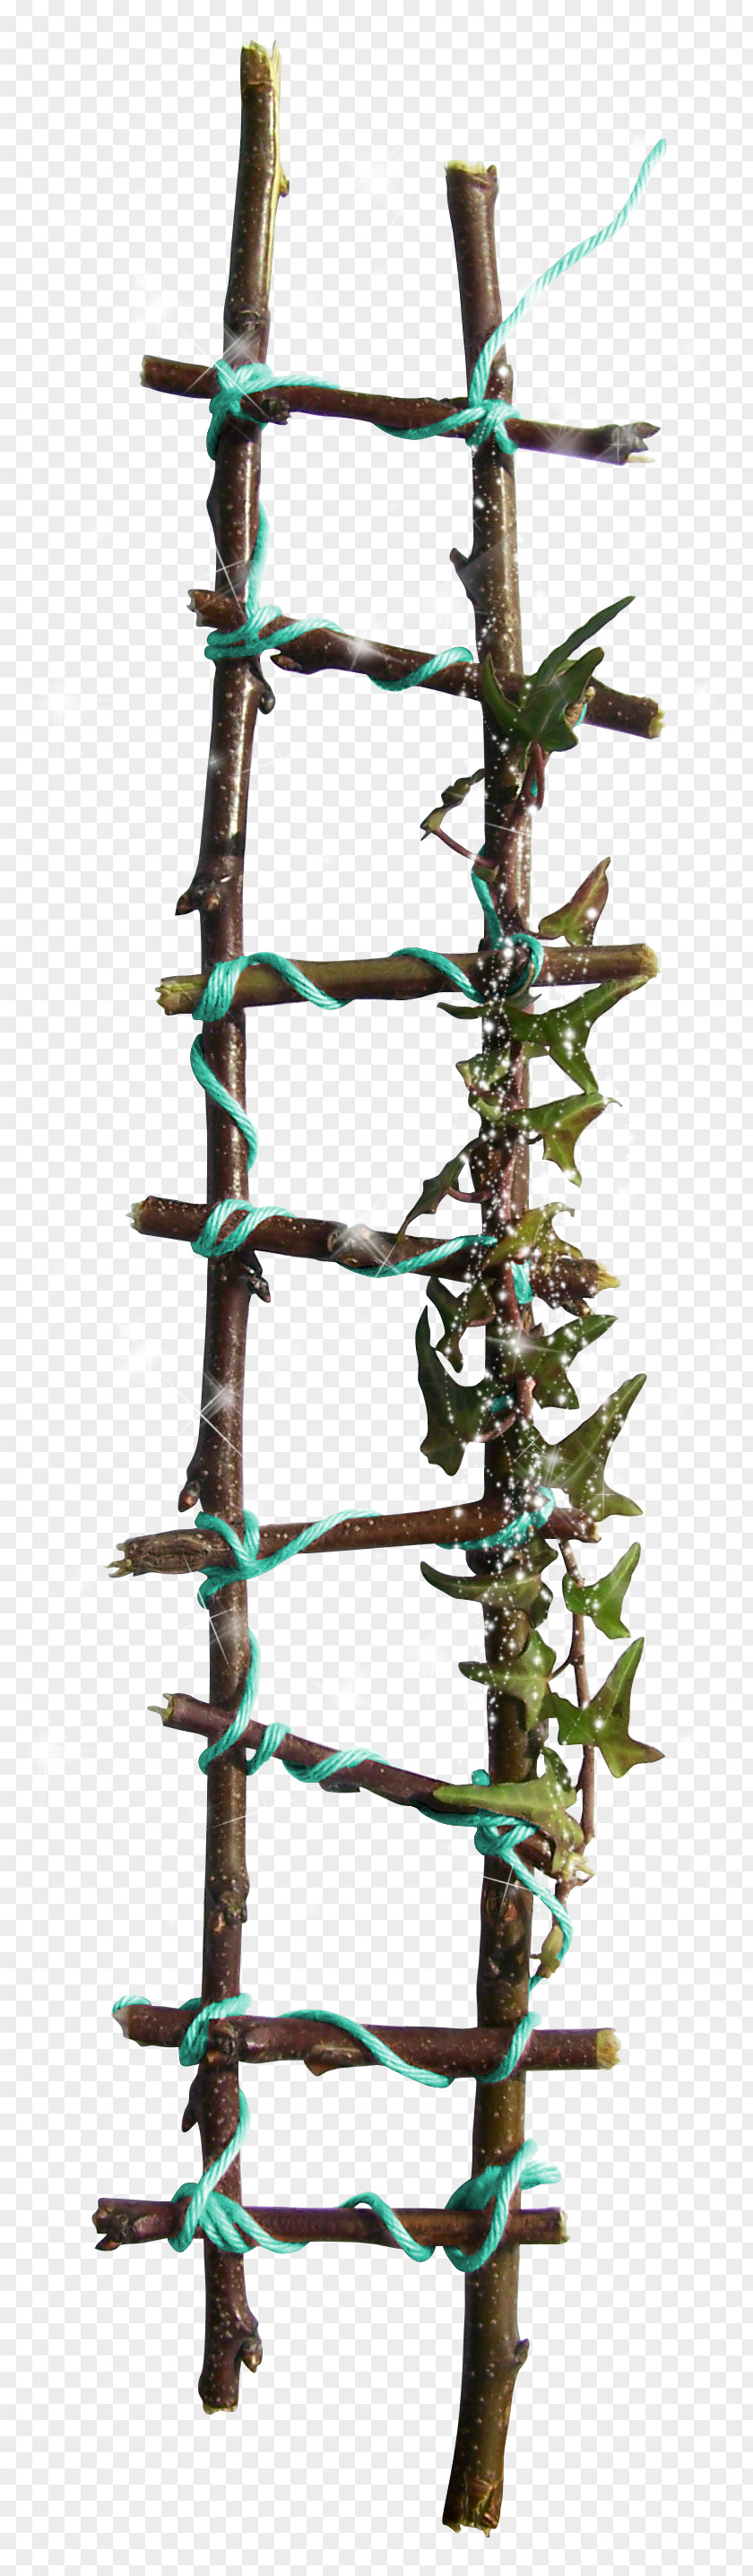 Ladder Twig Branch Plant Stem Tree Organism PNG